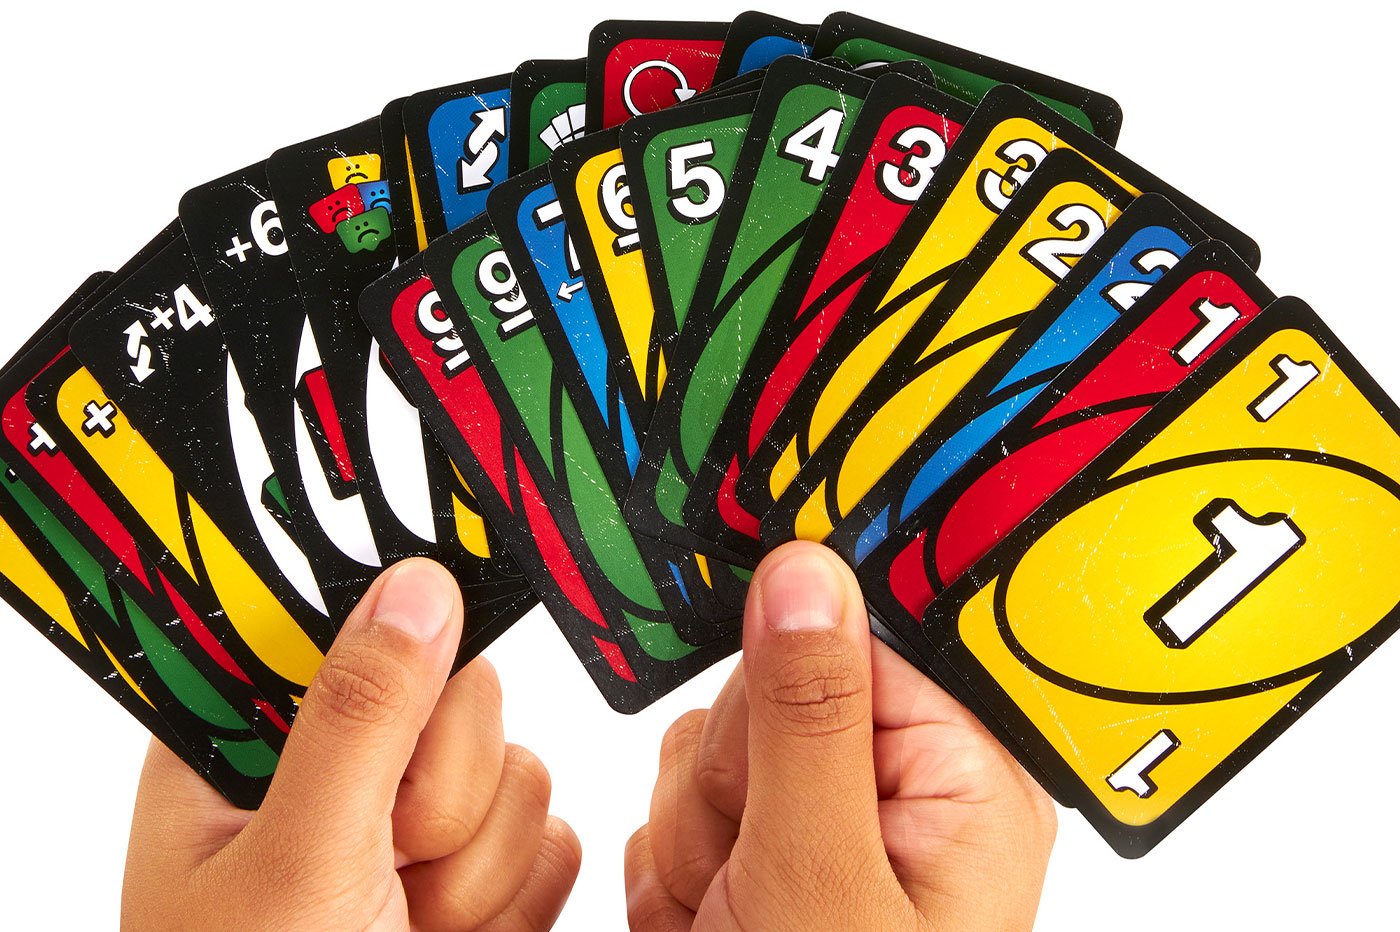 Uno - Règles du jeu de carte Uno